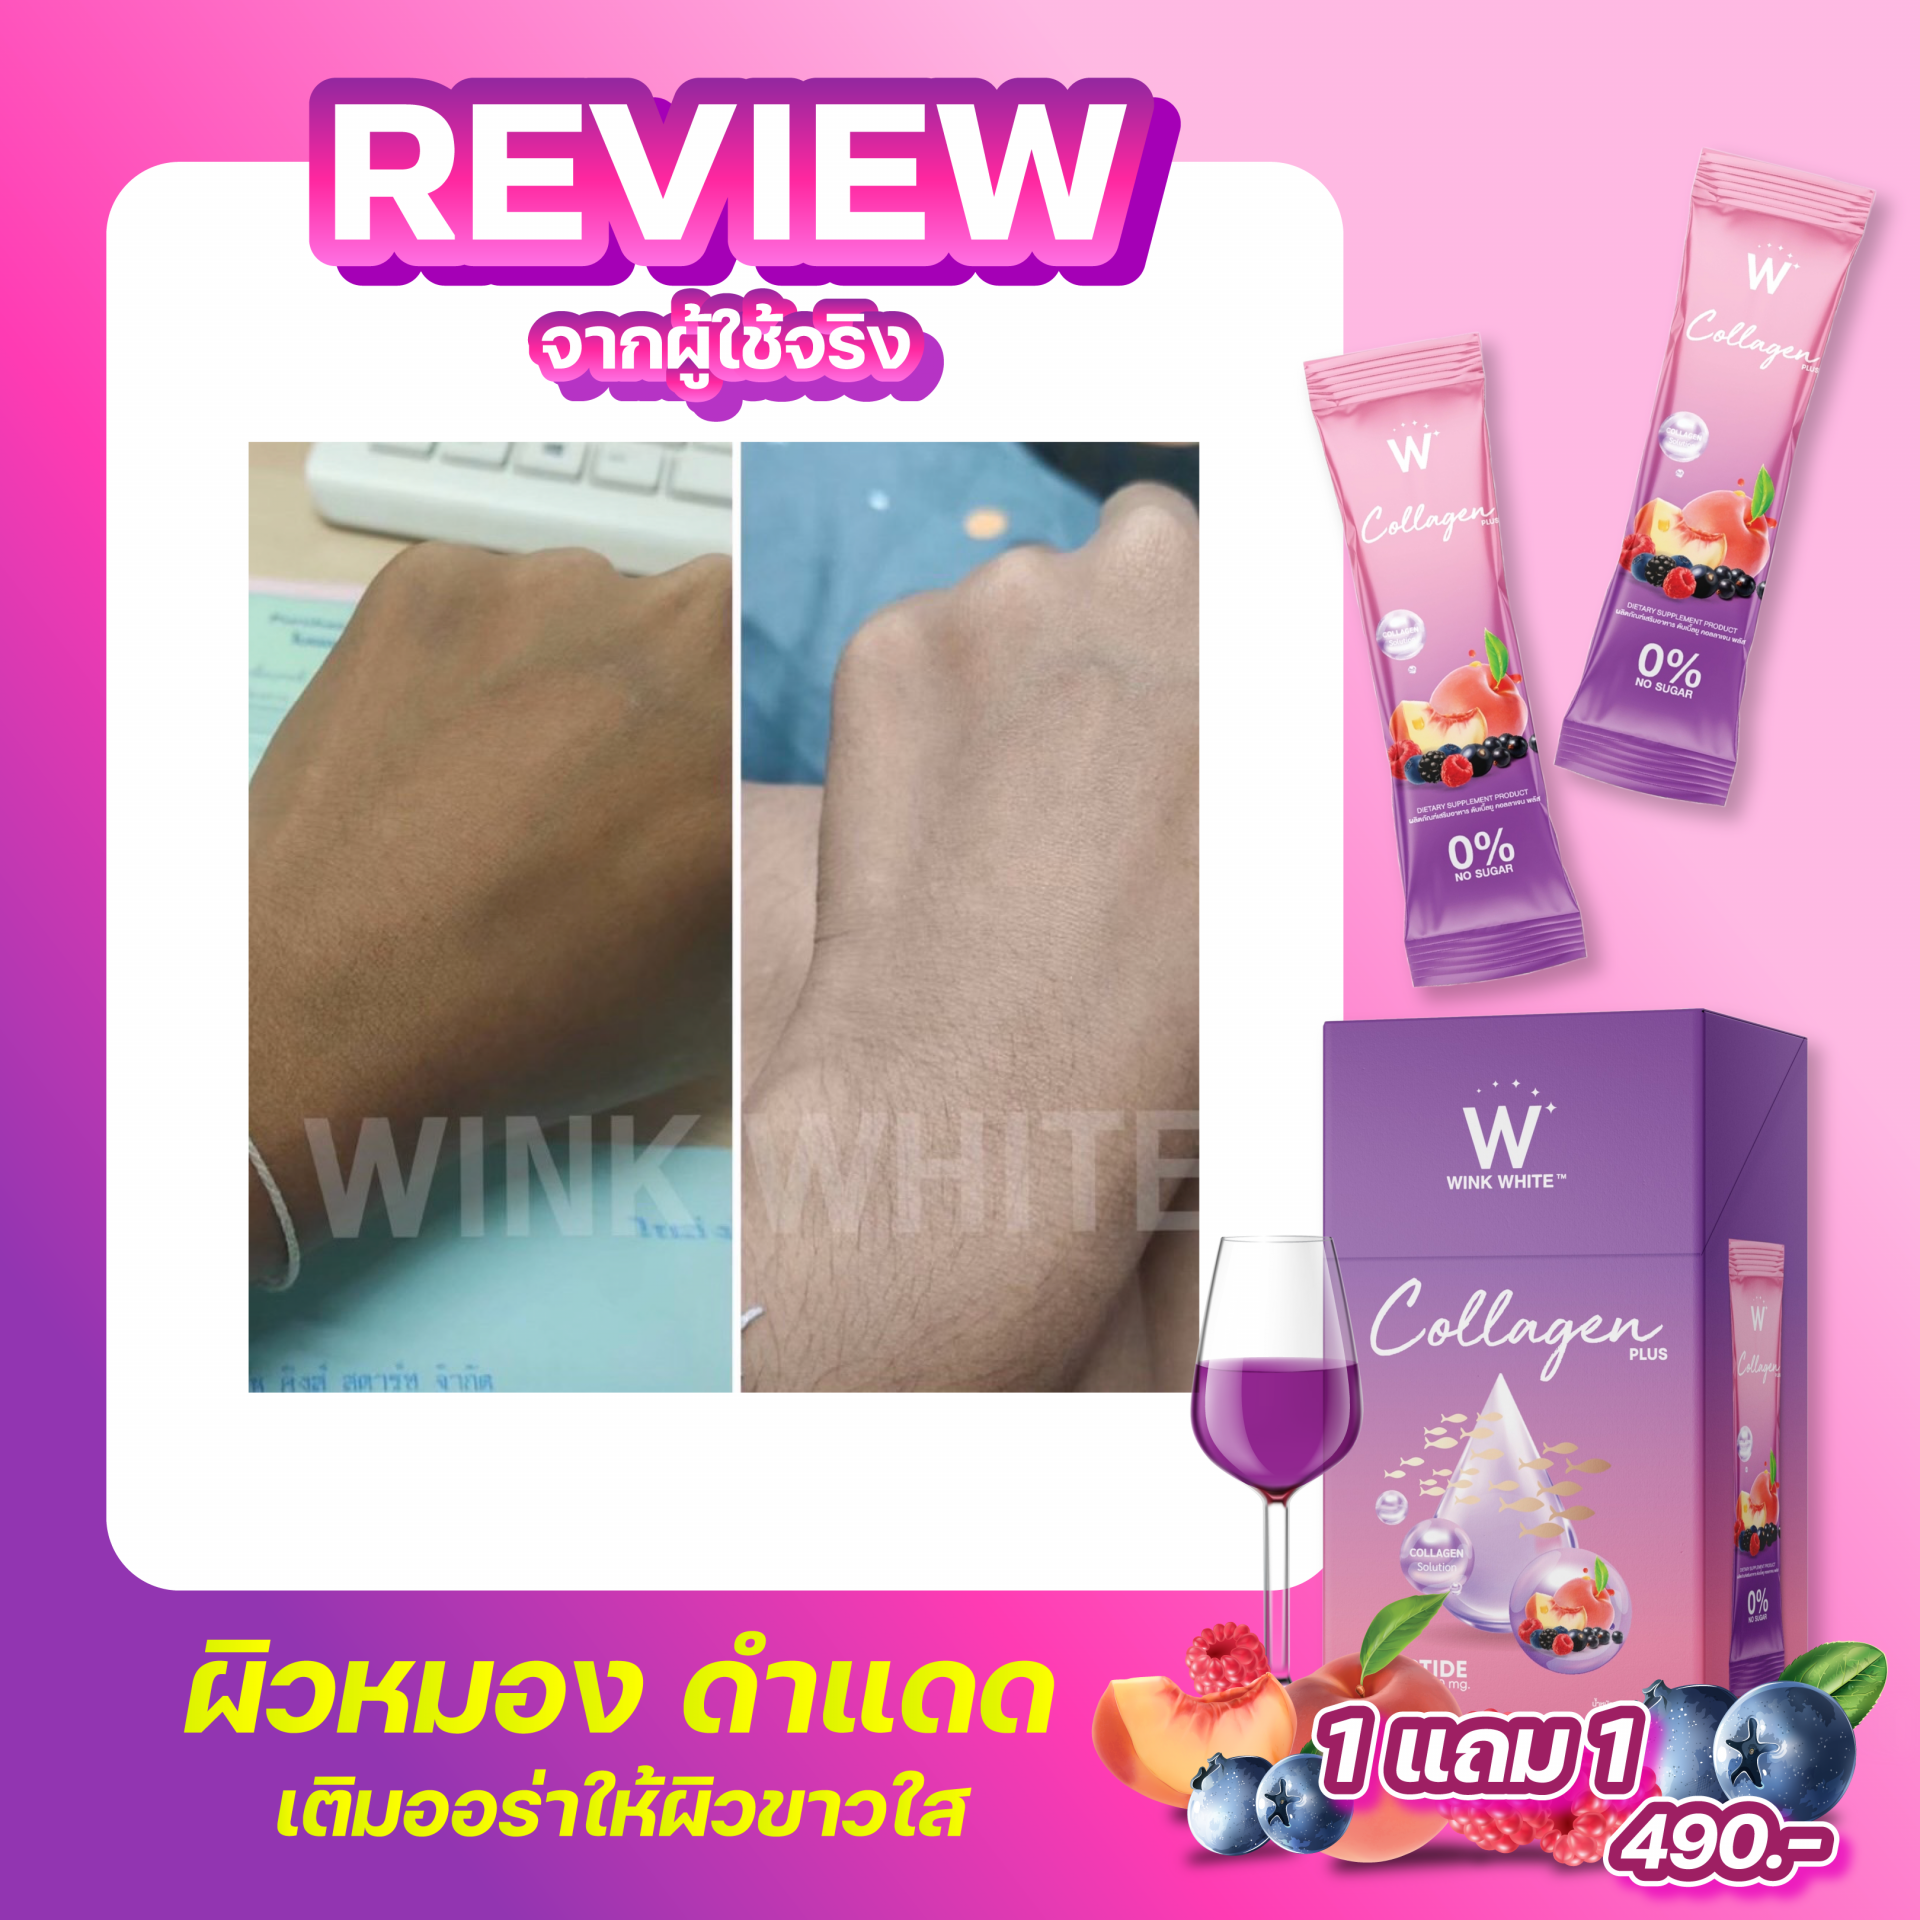  Review ผู้ใช้จริง ( WINK WHITE W Collagen Plus)